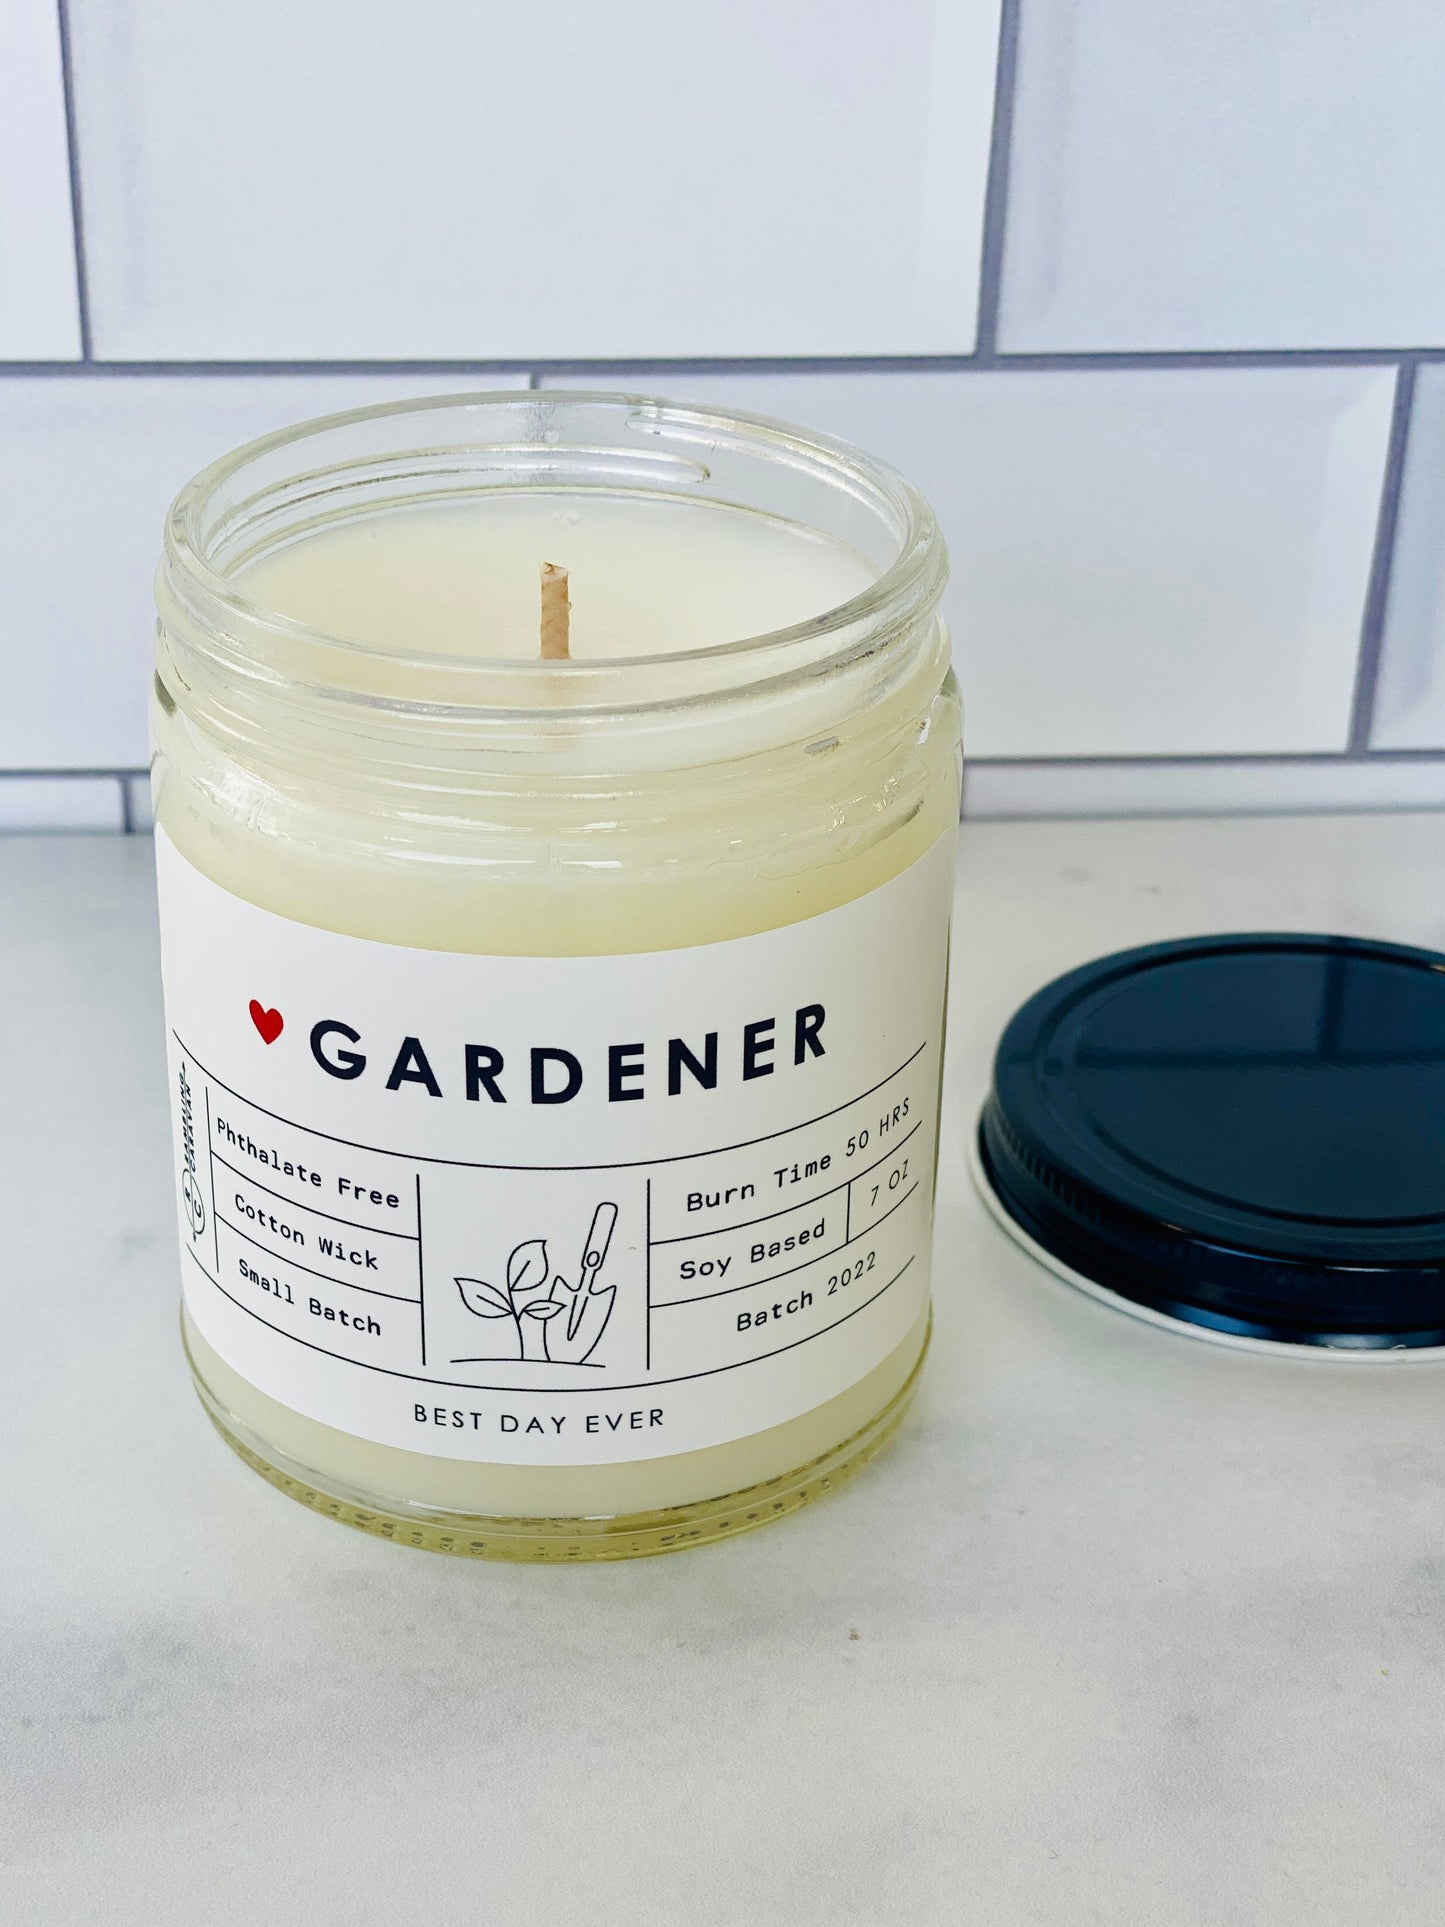 Gardener Candle